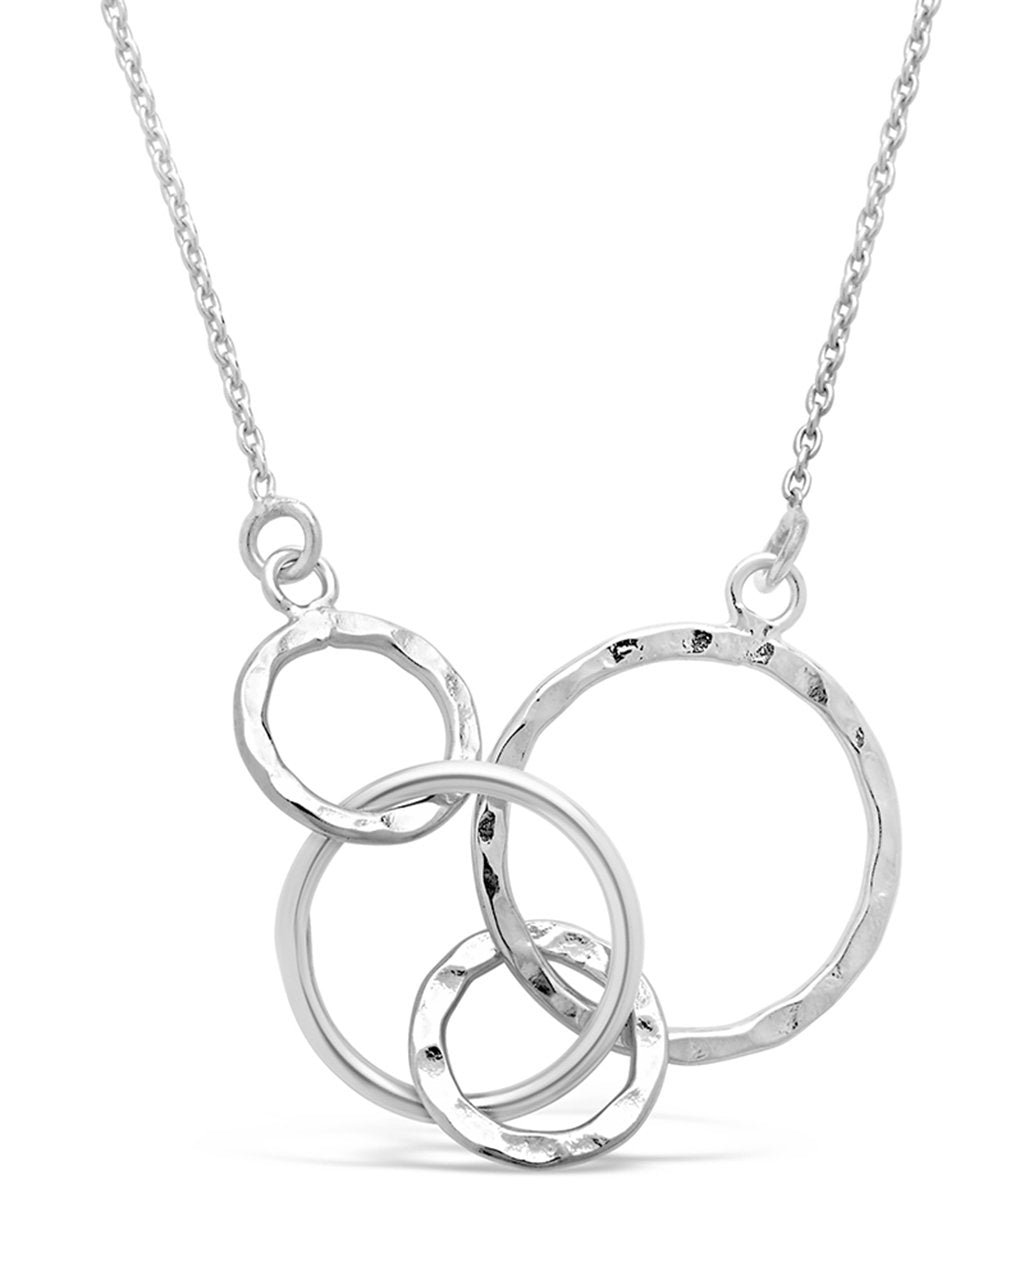 Sterling Silver Multi Linked Necklace - Sterling Forever